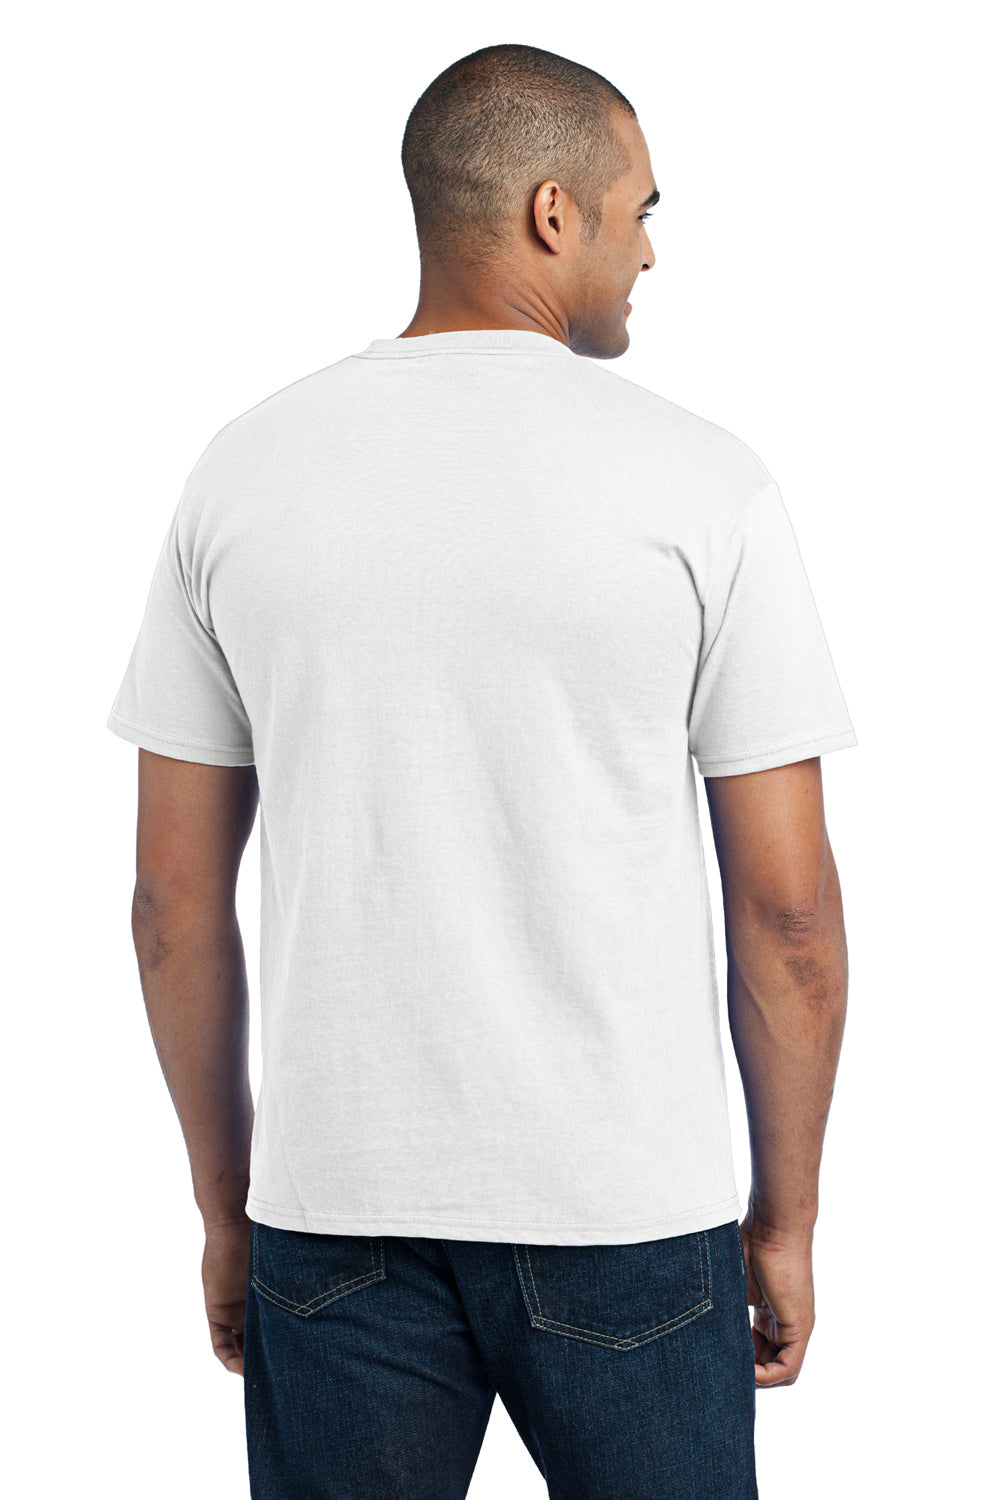 Port & Company PC55P Mens Core Short Sleeve Crewneck T-Shirt w/ Pocket White Back